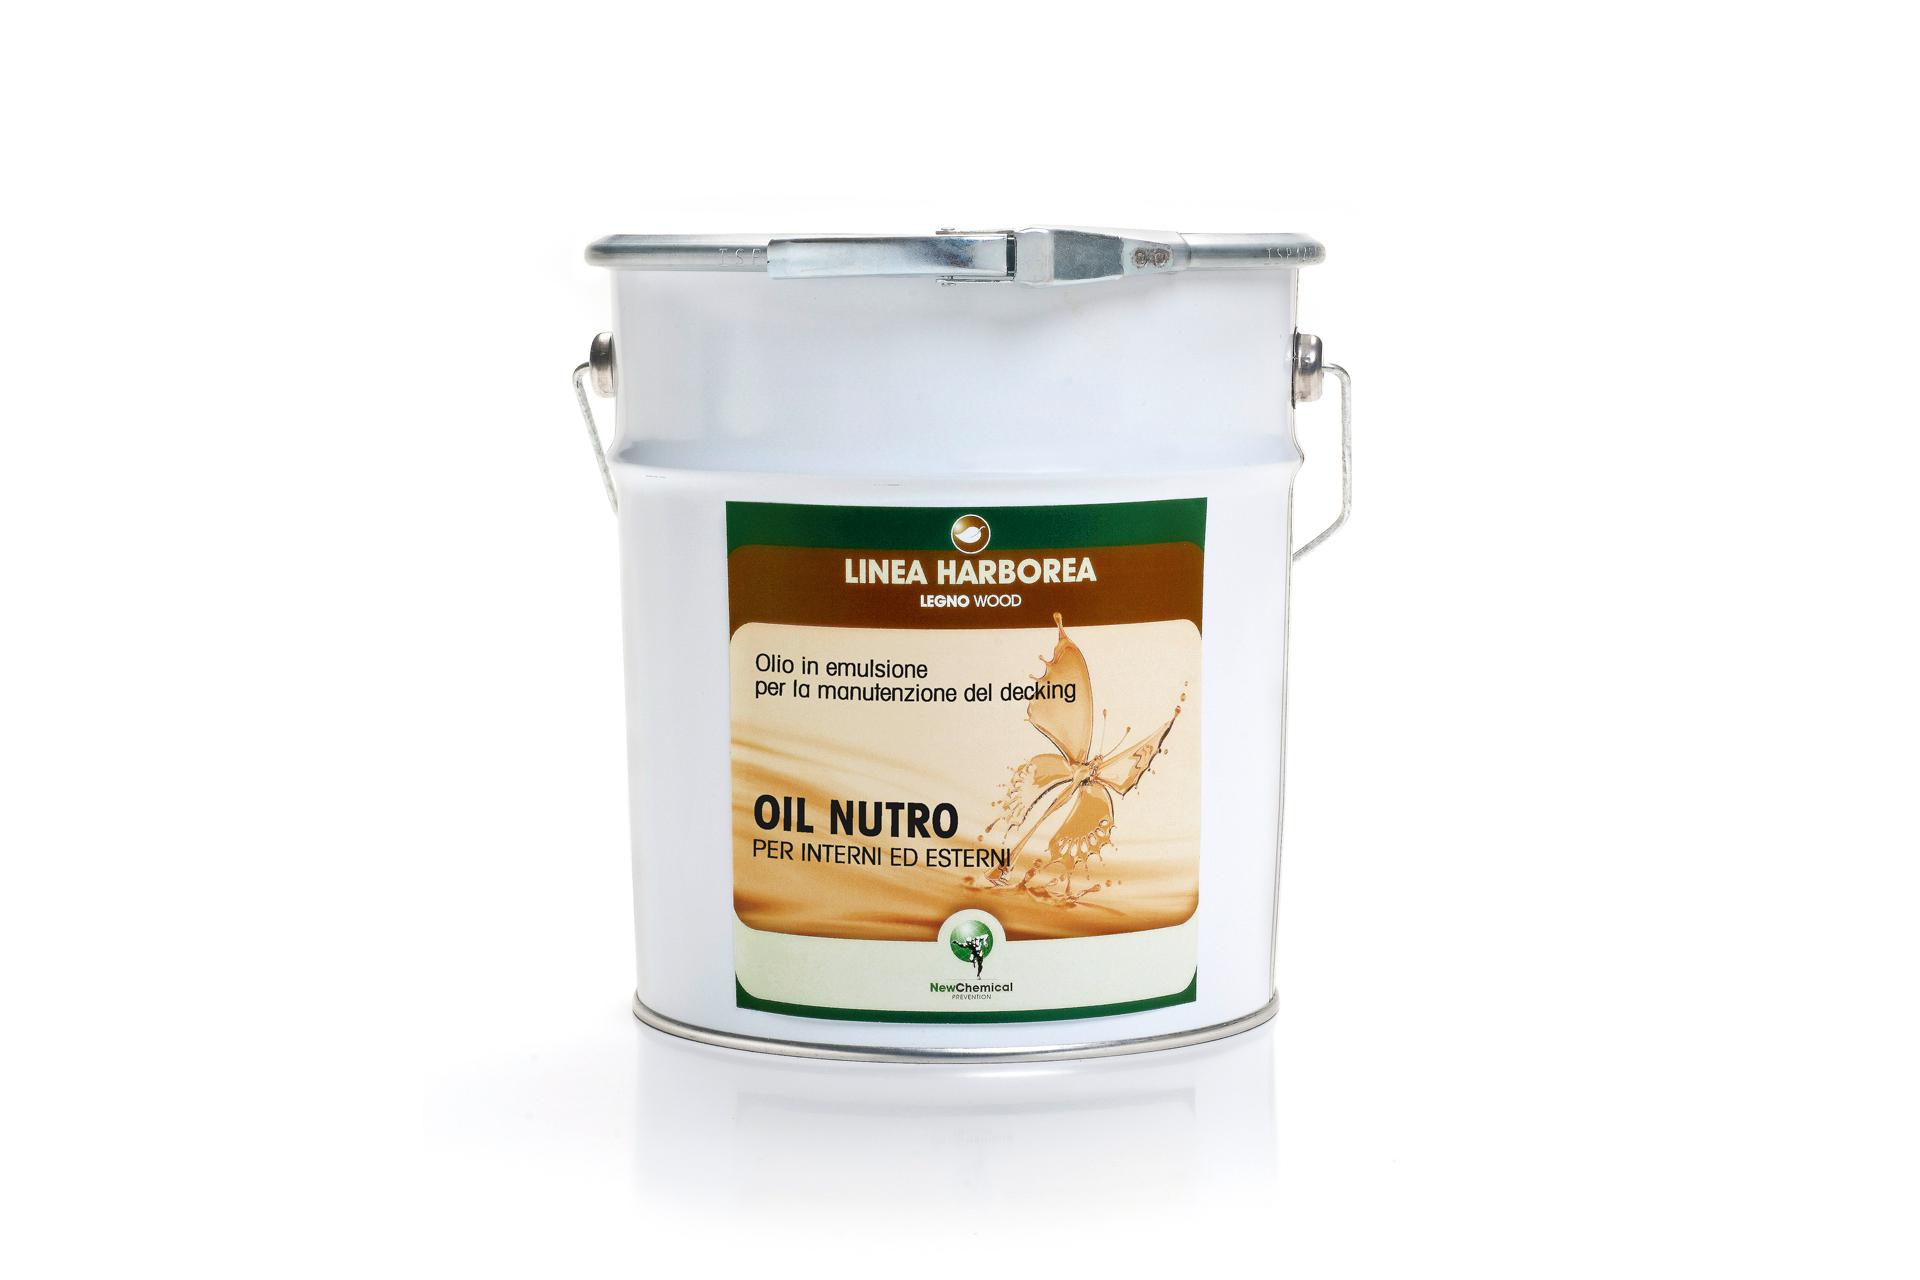 Oil Nutro